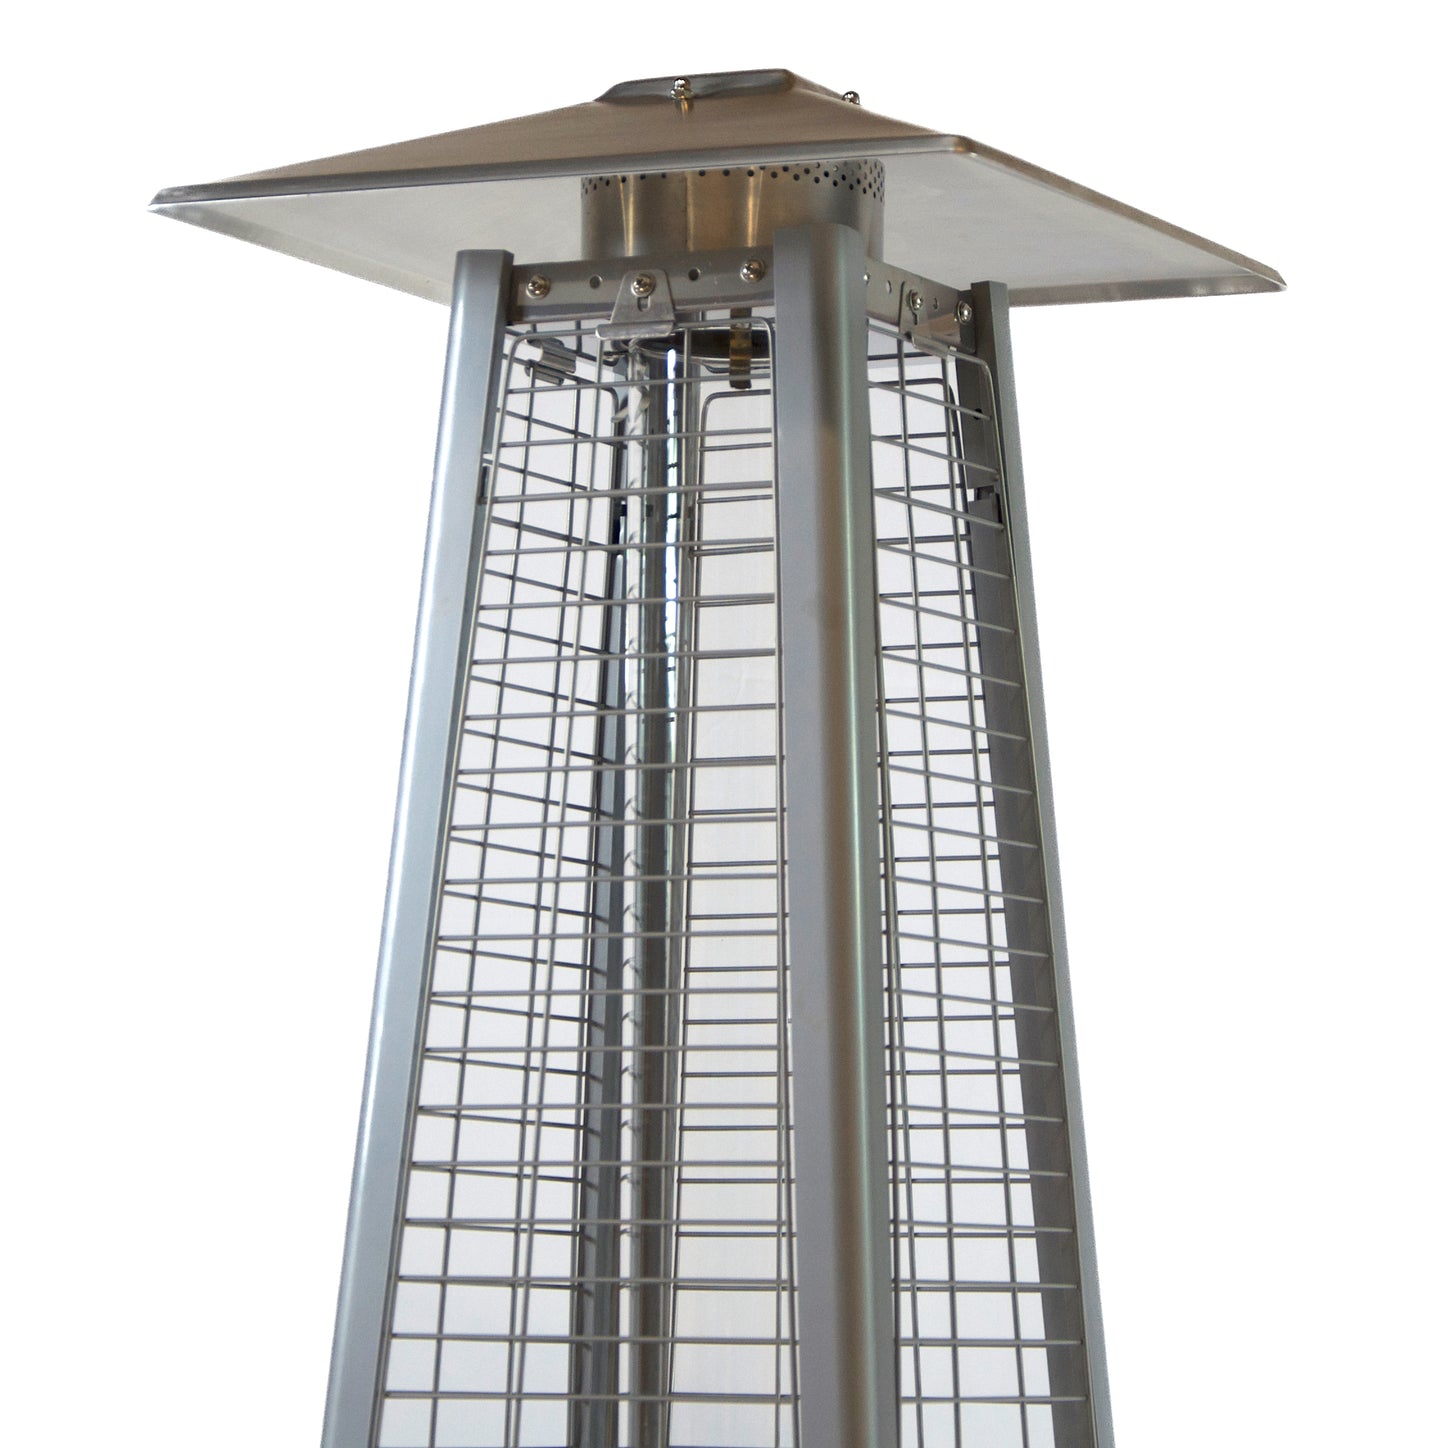 89" Tower Flame Propane Patio Heater - Dark Brown Wicker